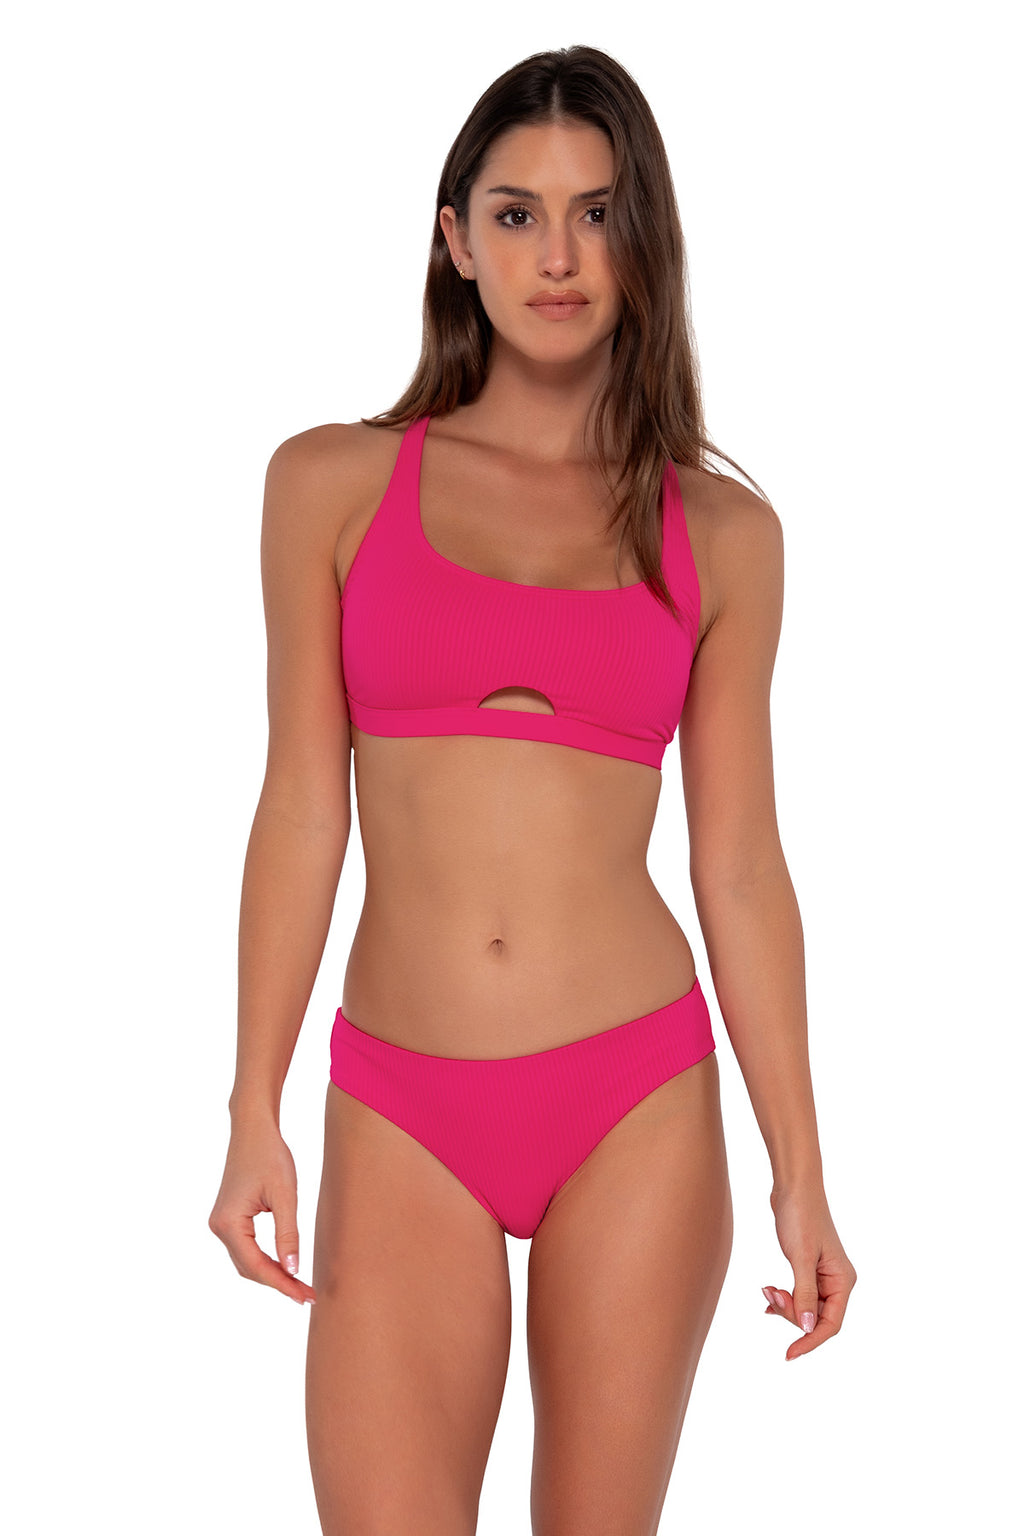 Tiger Lily Brandi Bralette, Sporty & Adjustable Bikini Top